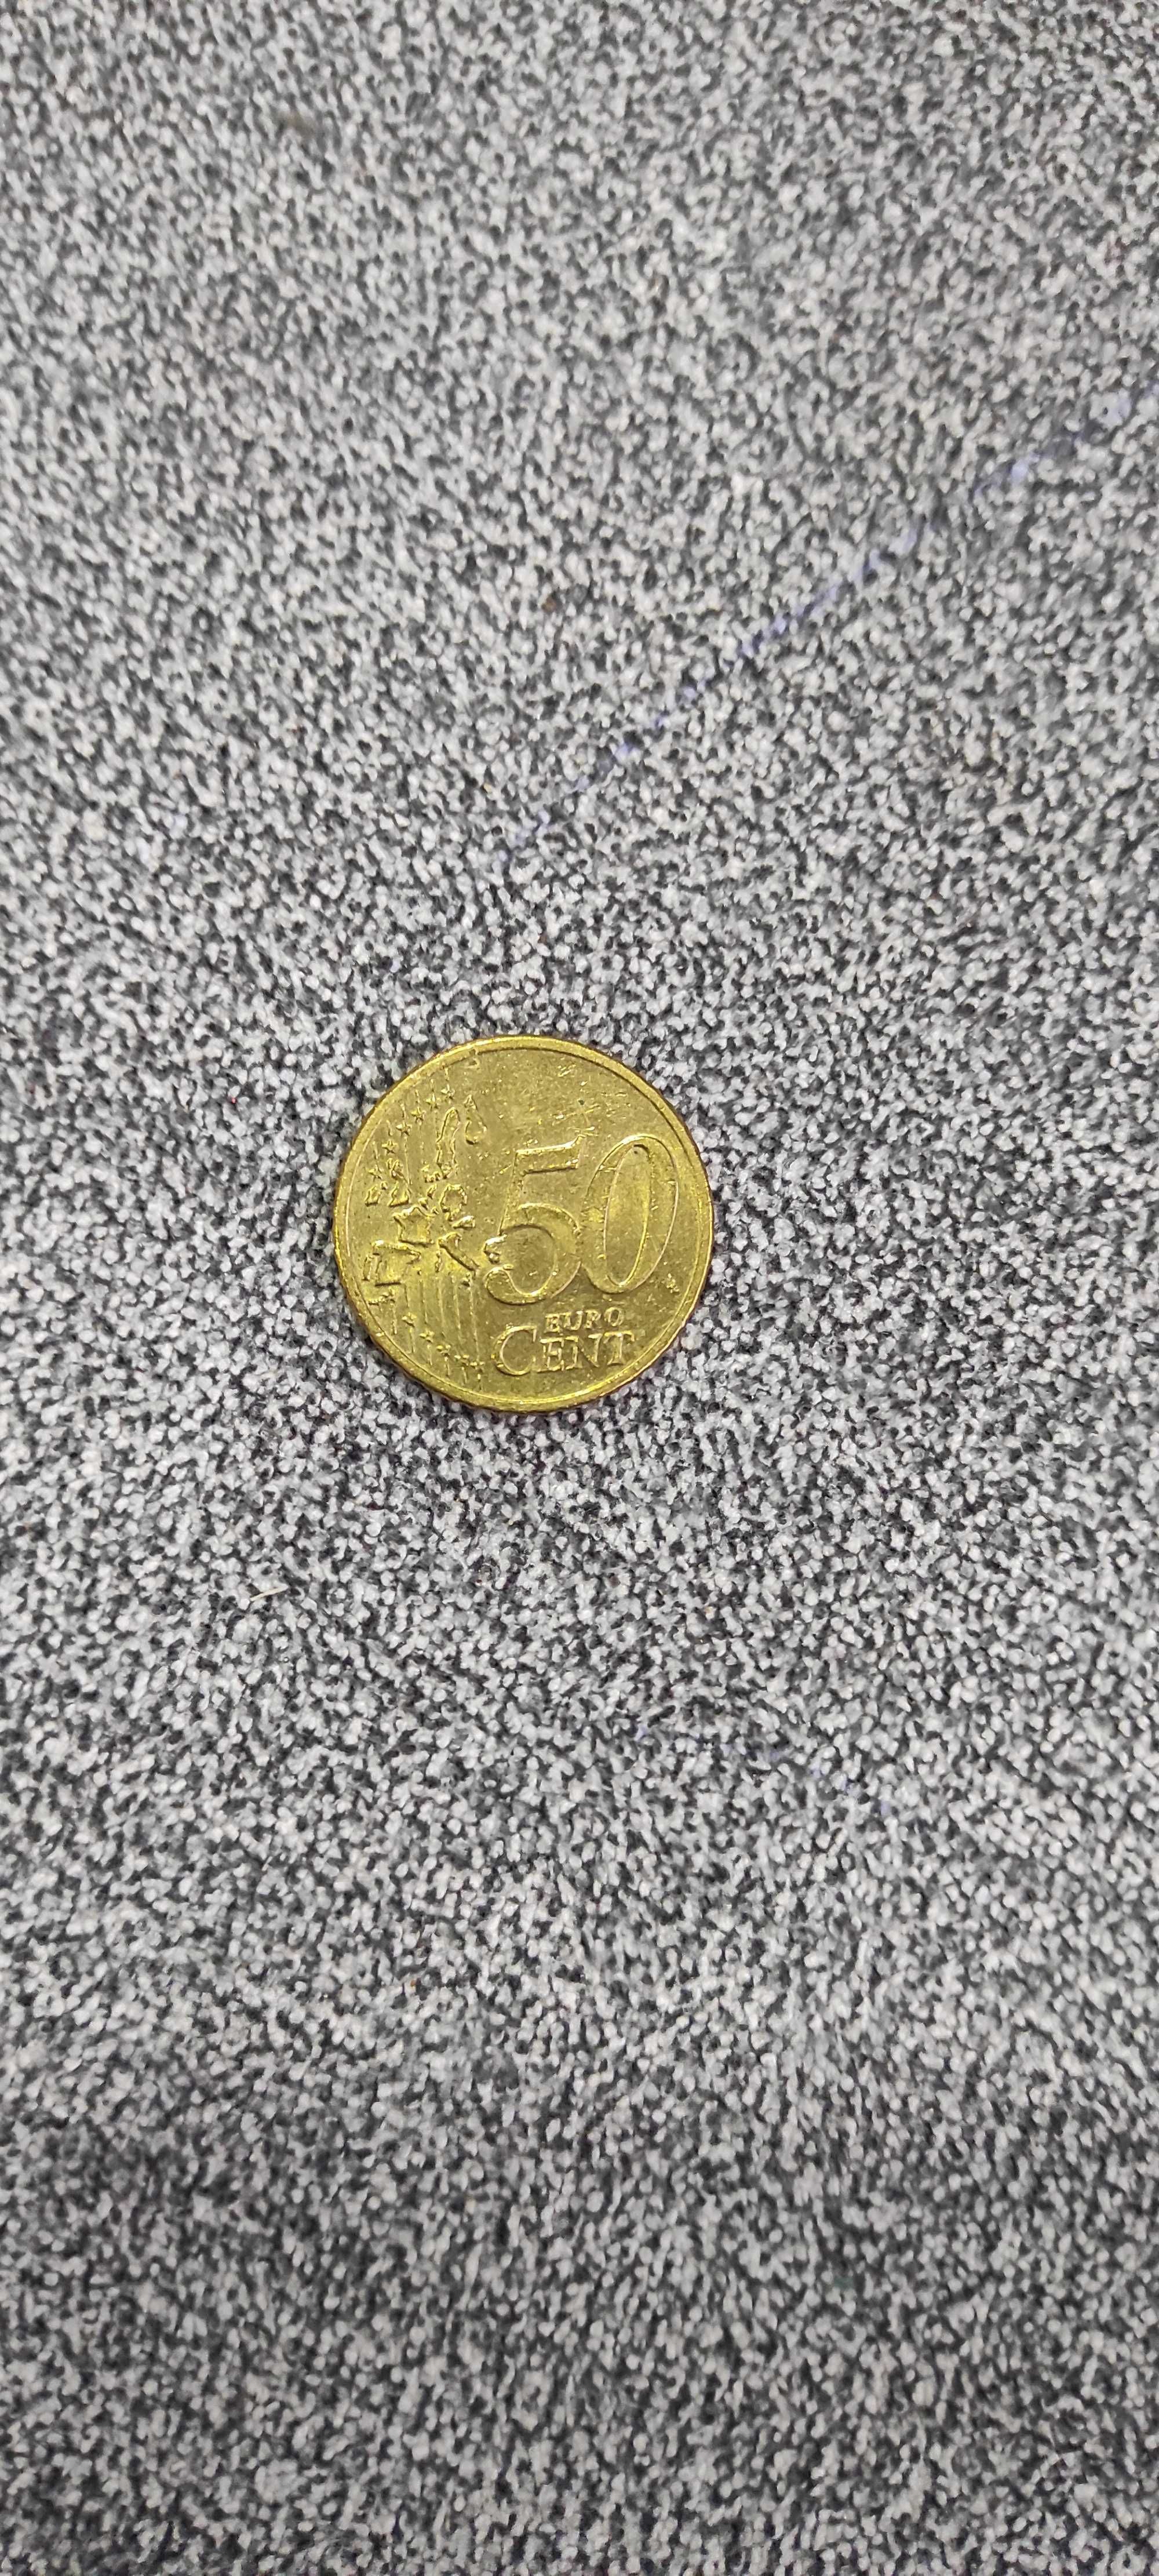 Vand monedă 50 cenți din 2002